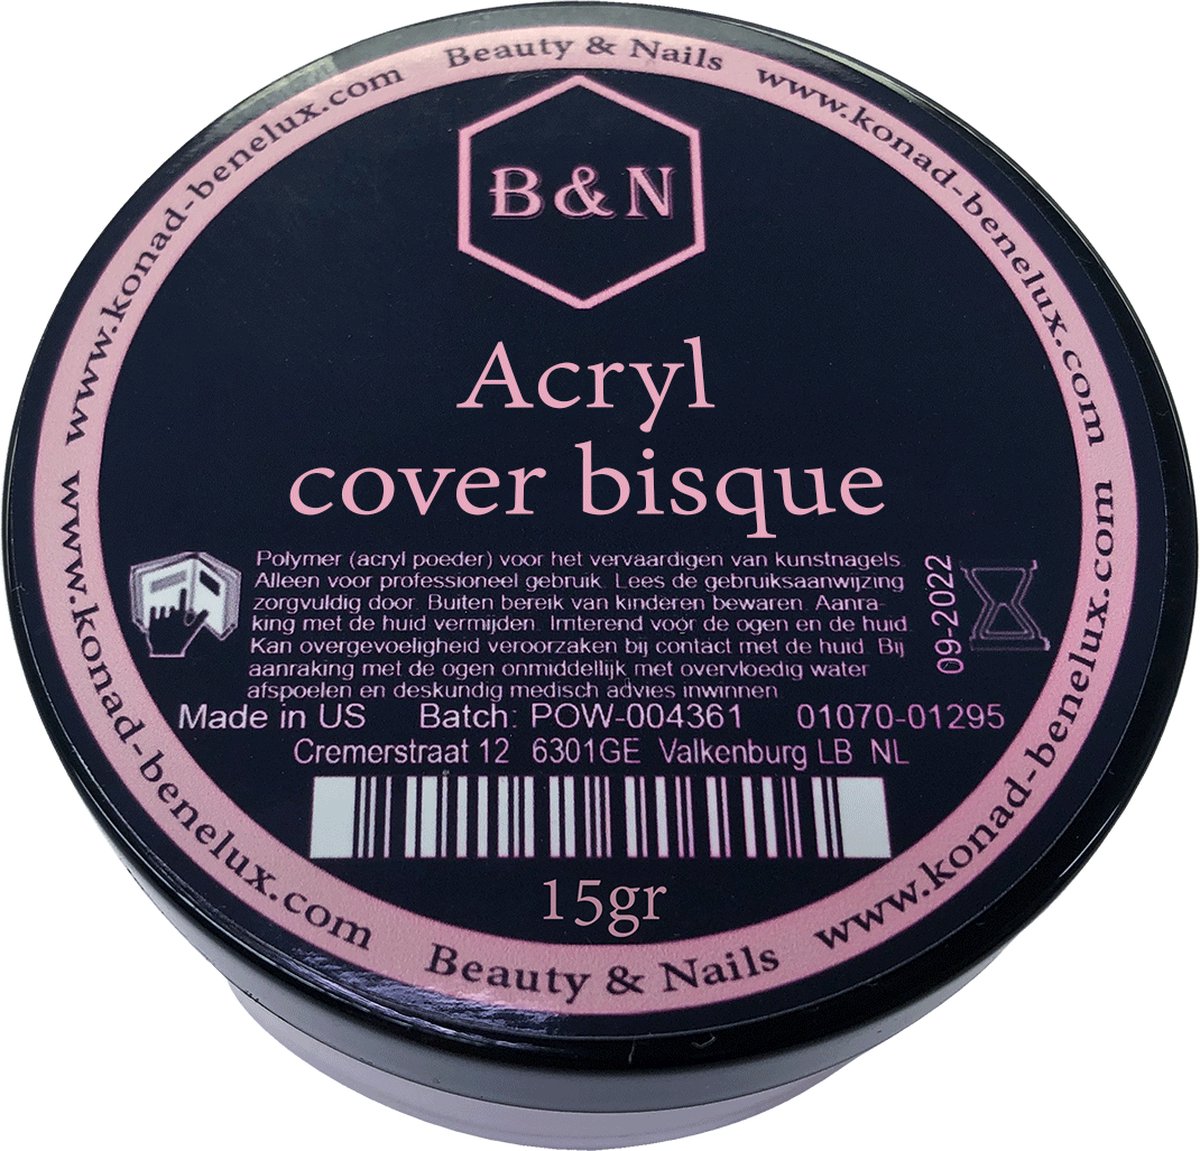 Acryl - cover bisque - 15 gr | B&N - acrylpoeder - VEGAN - acrylpoeder